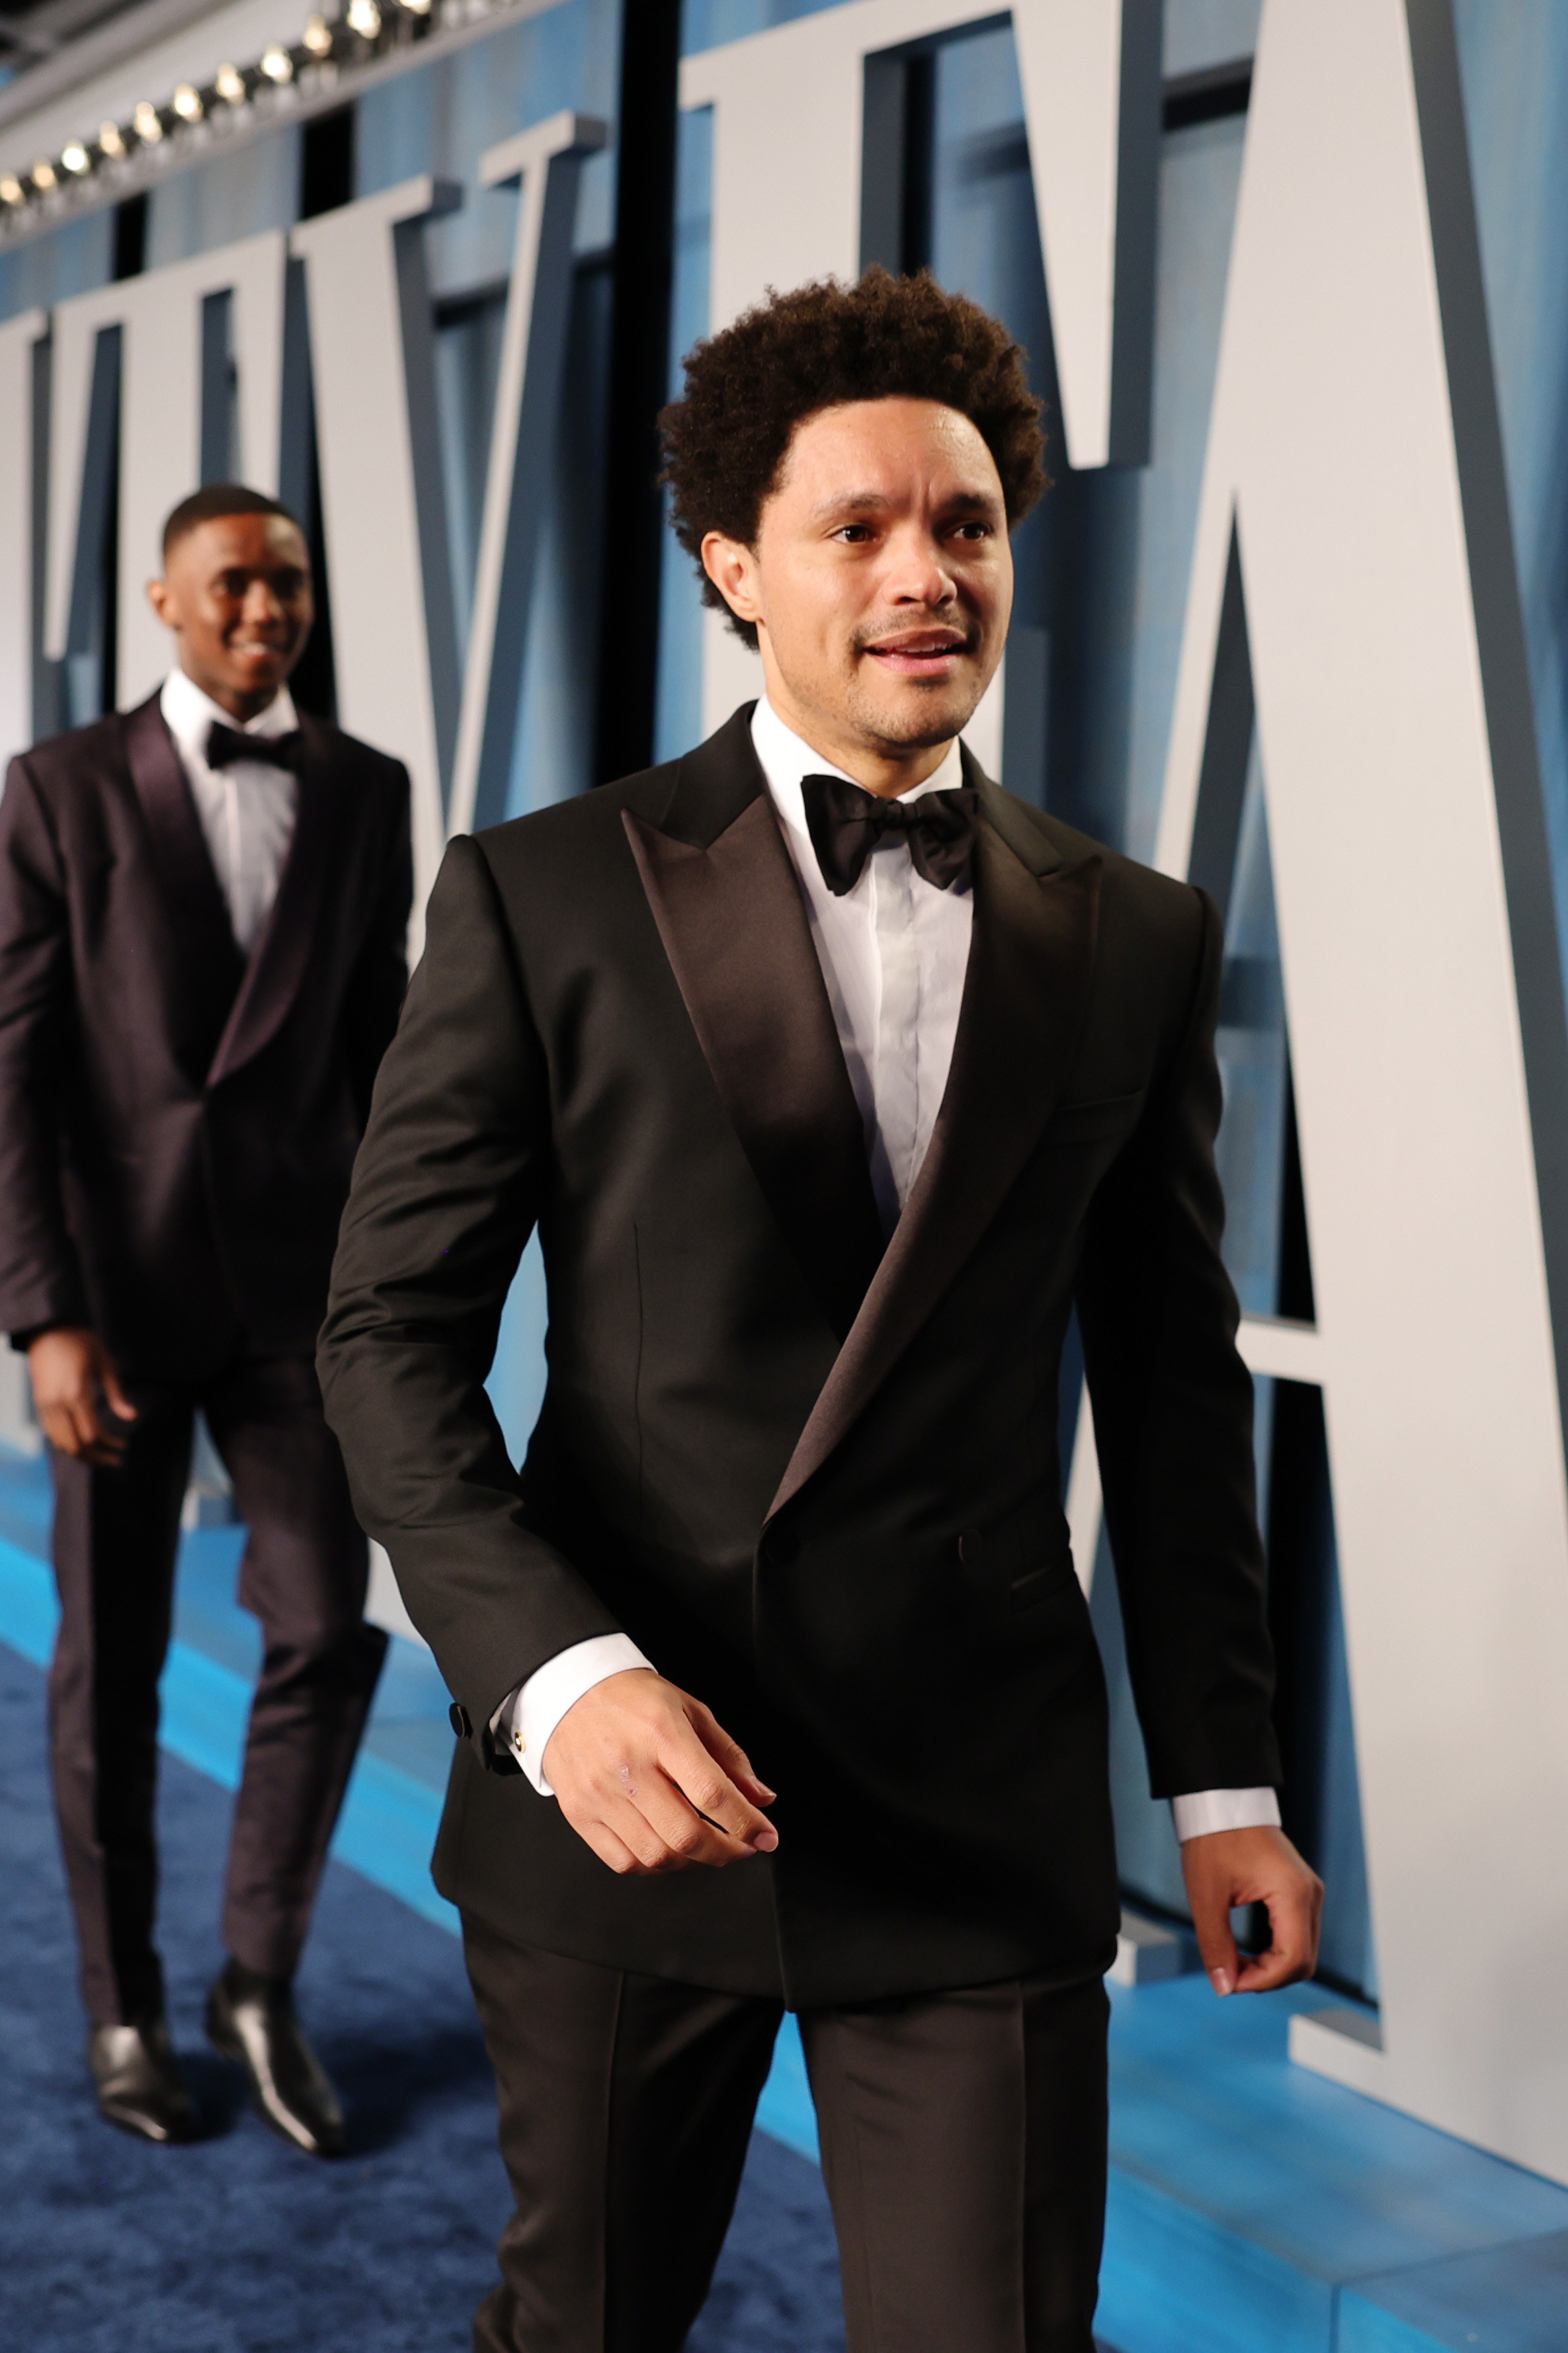 Trevor walks while wearing a tuxedo